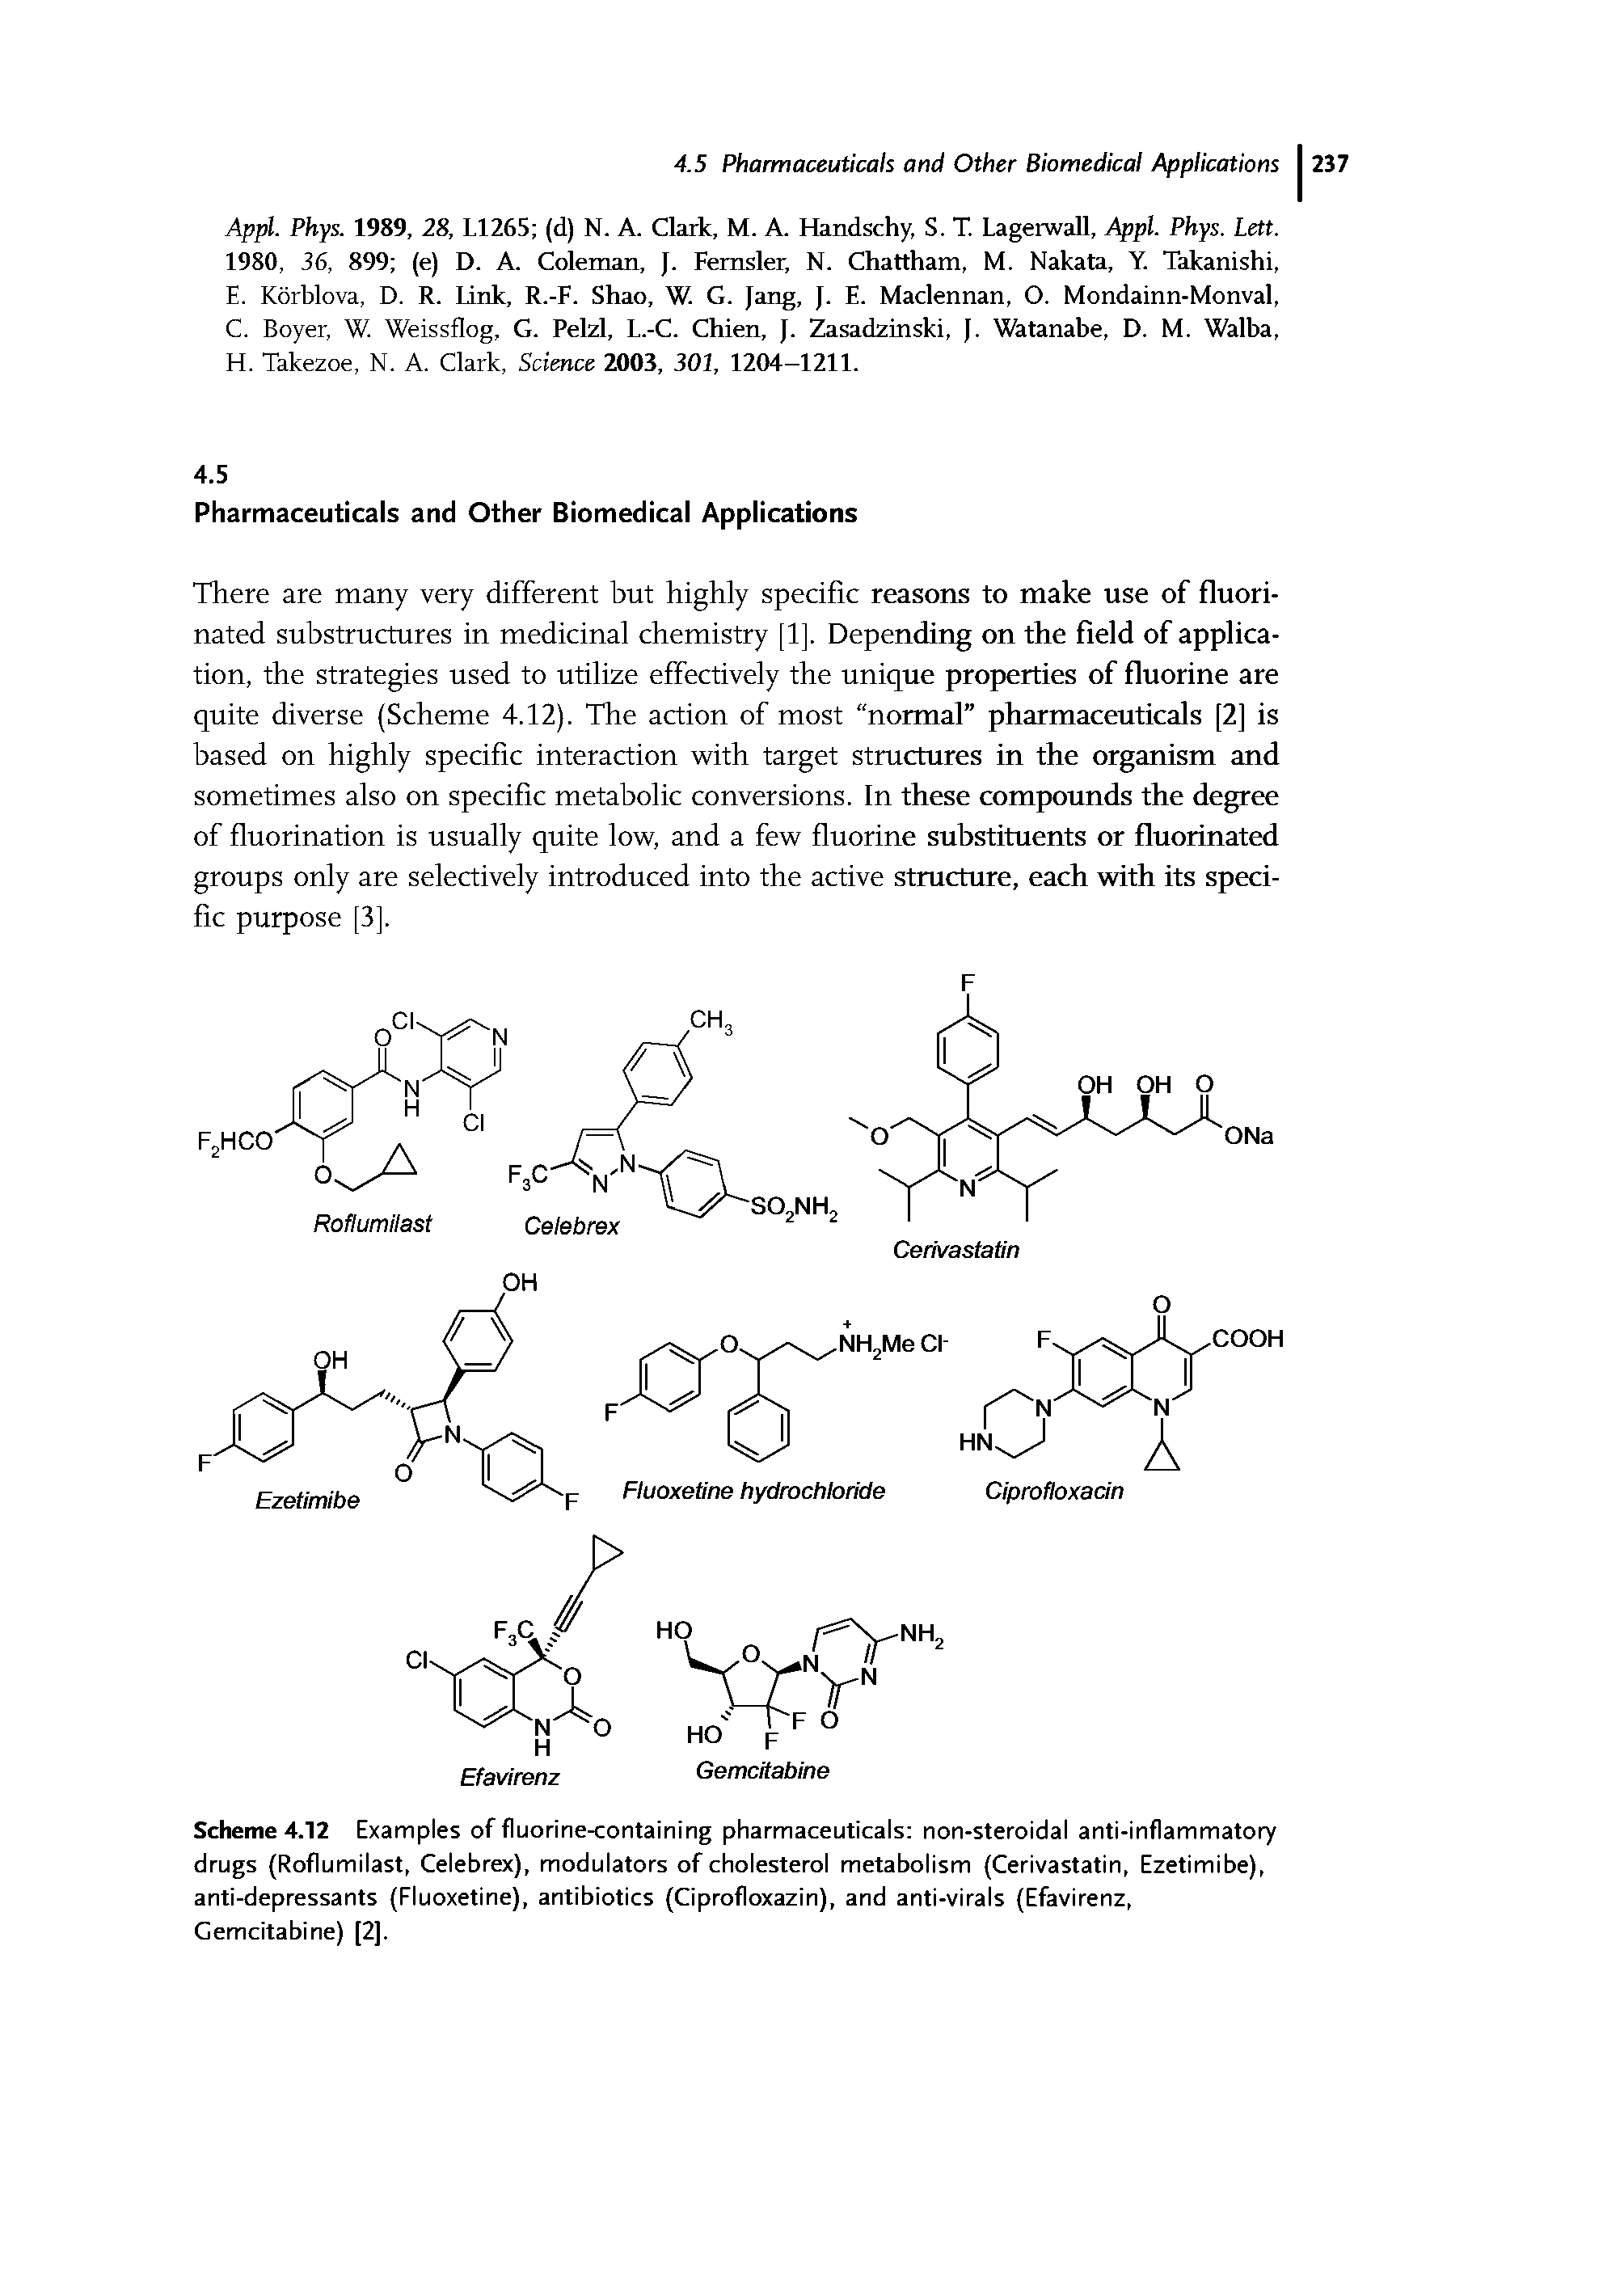 Scheme 4.12 Examples of fluorine<ontaining pharmaceuticals non-steroidal anti-inflammatory drugs (Roflumilast, Celebrex), modulators of cholesterol metabolism (Cerivastatin, Ezetimibe), anti-depressants (Fluoxetine), antibiotics (Ciprofloxazin), and anti-virals (Efavirenz, Gemcitabine) [2].